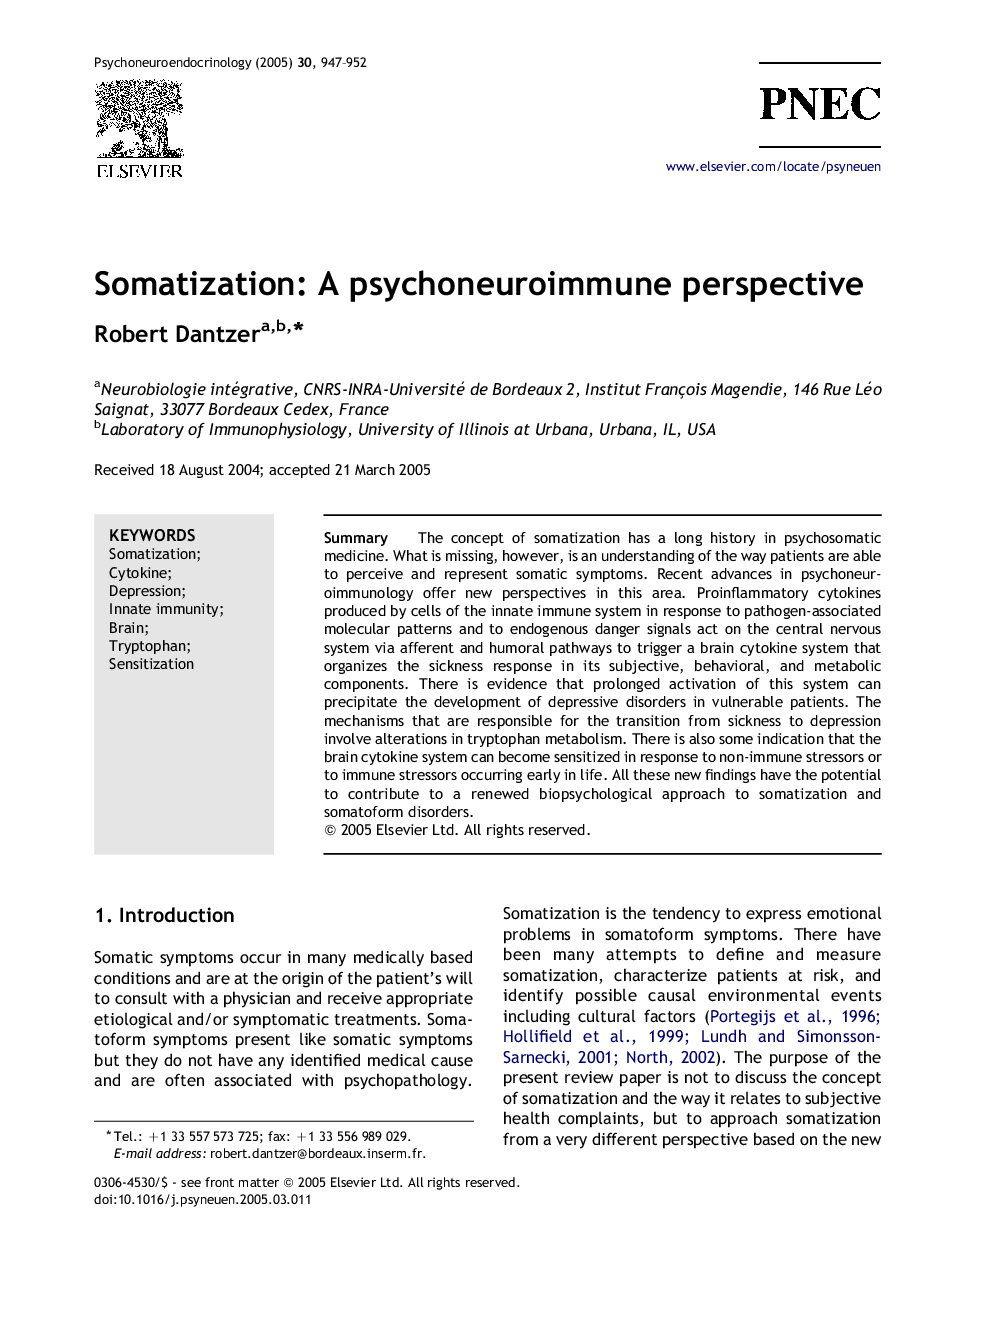 Somatization: A psychoneuroimmune perspective